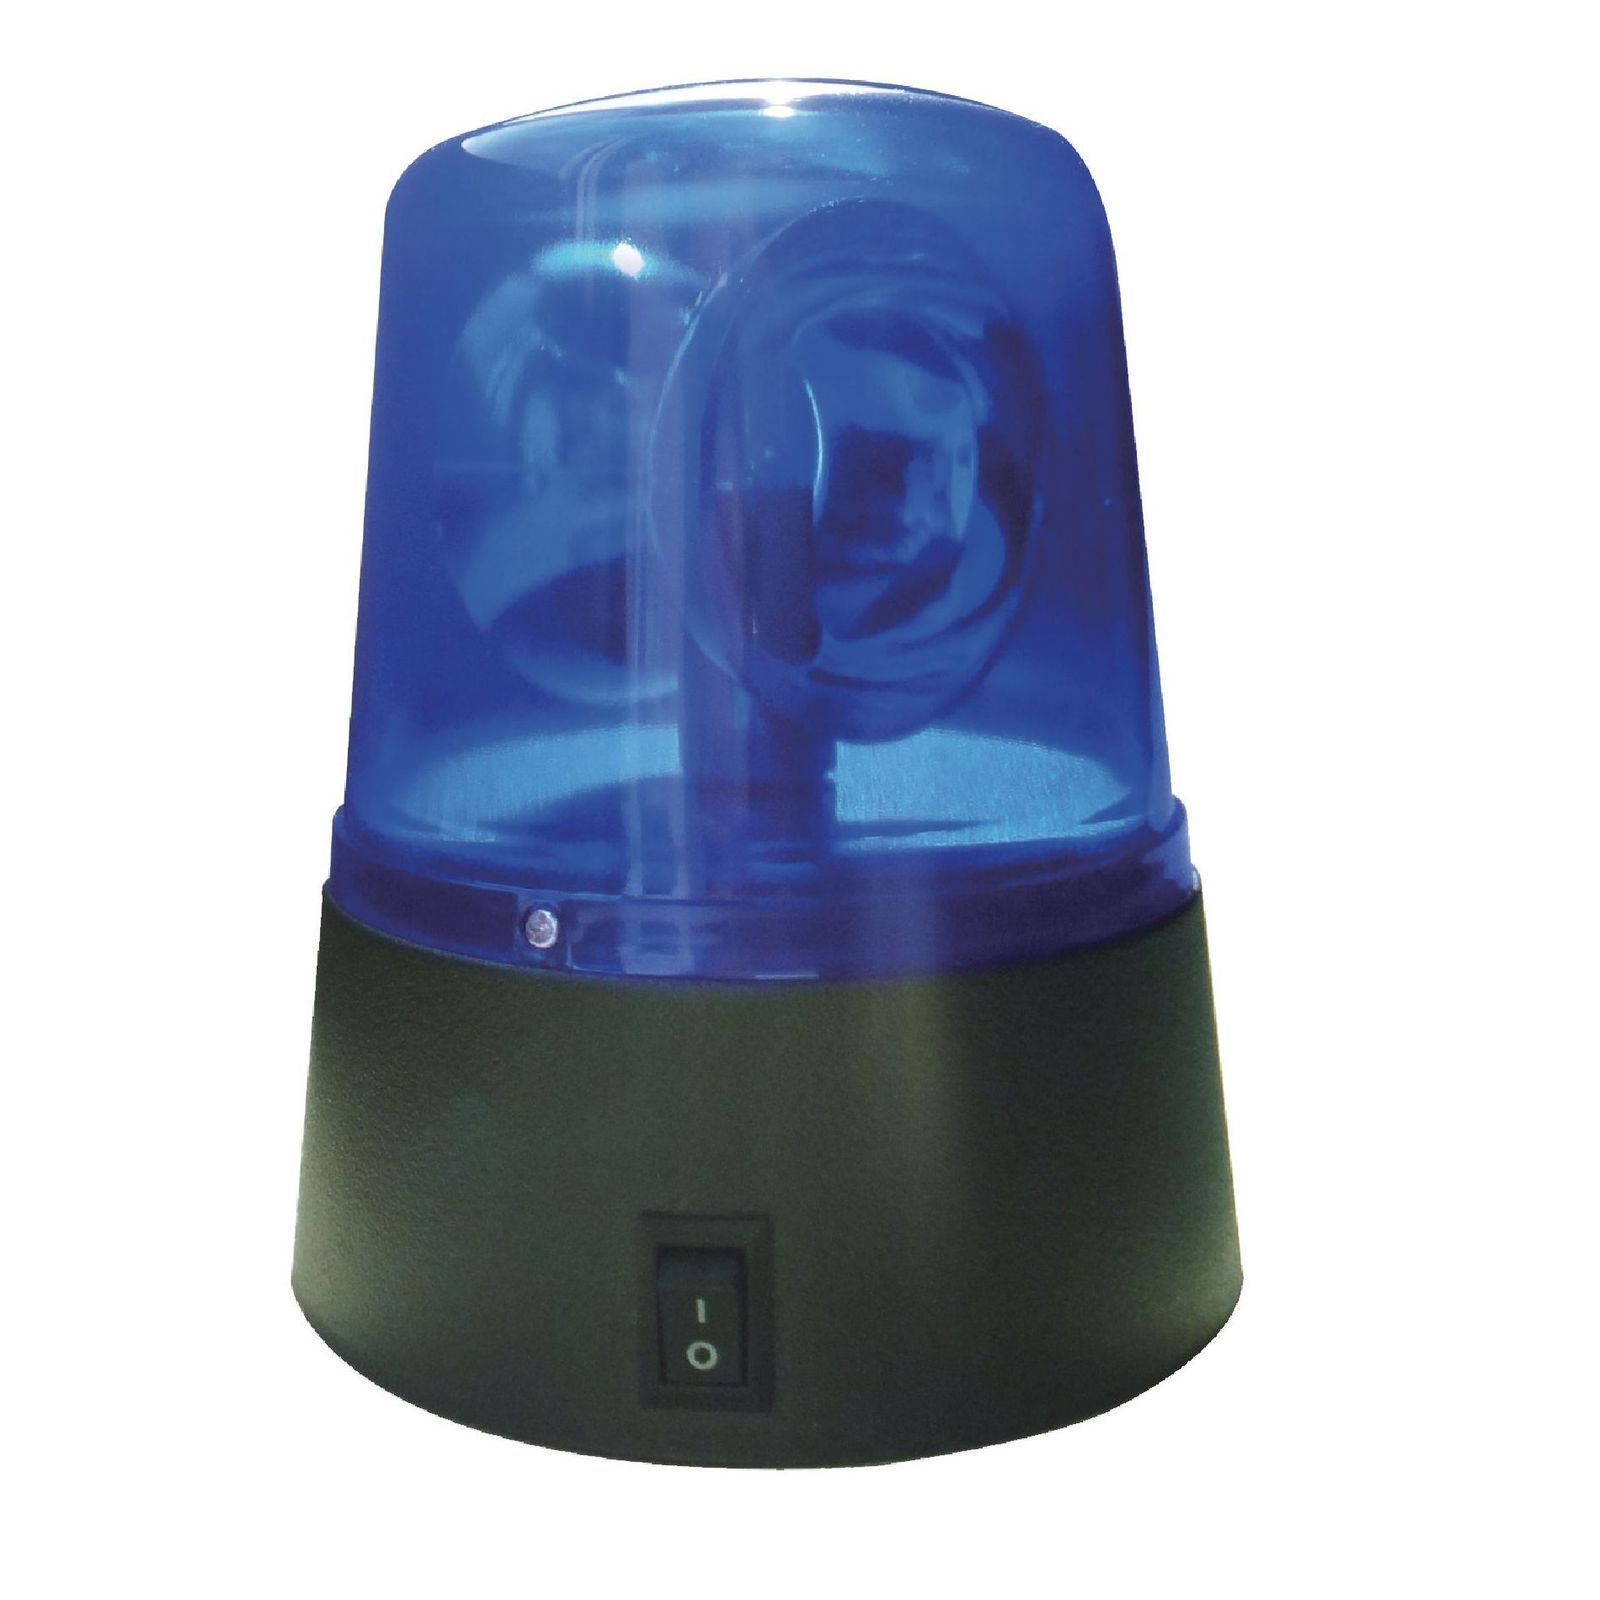 Lampeggiante Luminoso a Led Blu Polizia | LGV Shopping